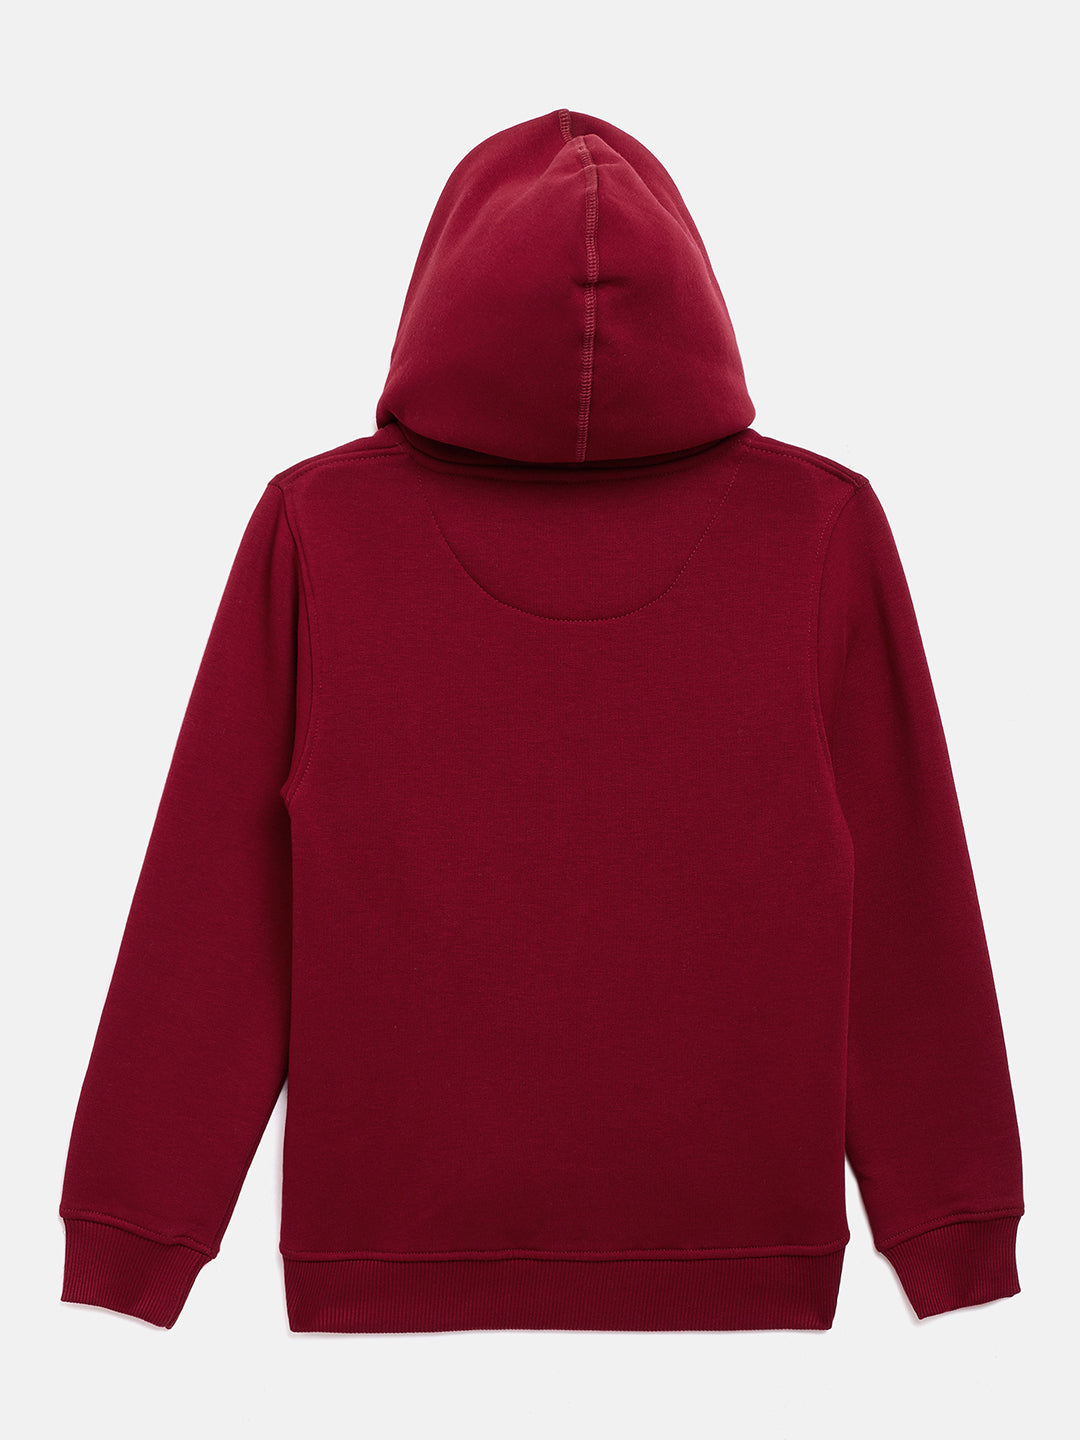 Red Hooded Sweatshirt - Girls Sweatshirts